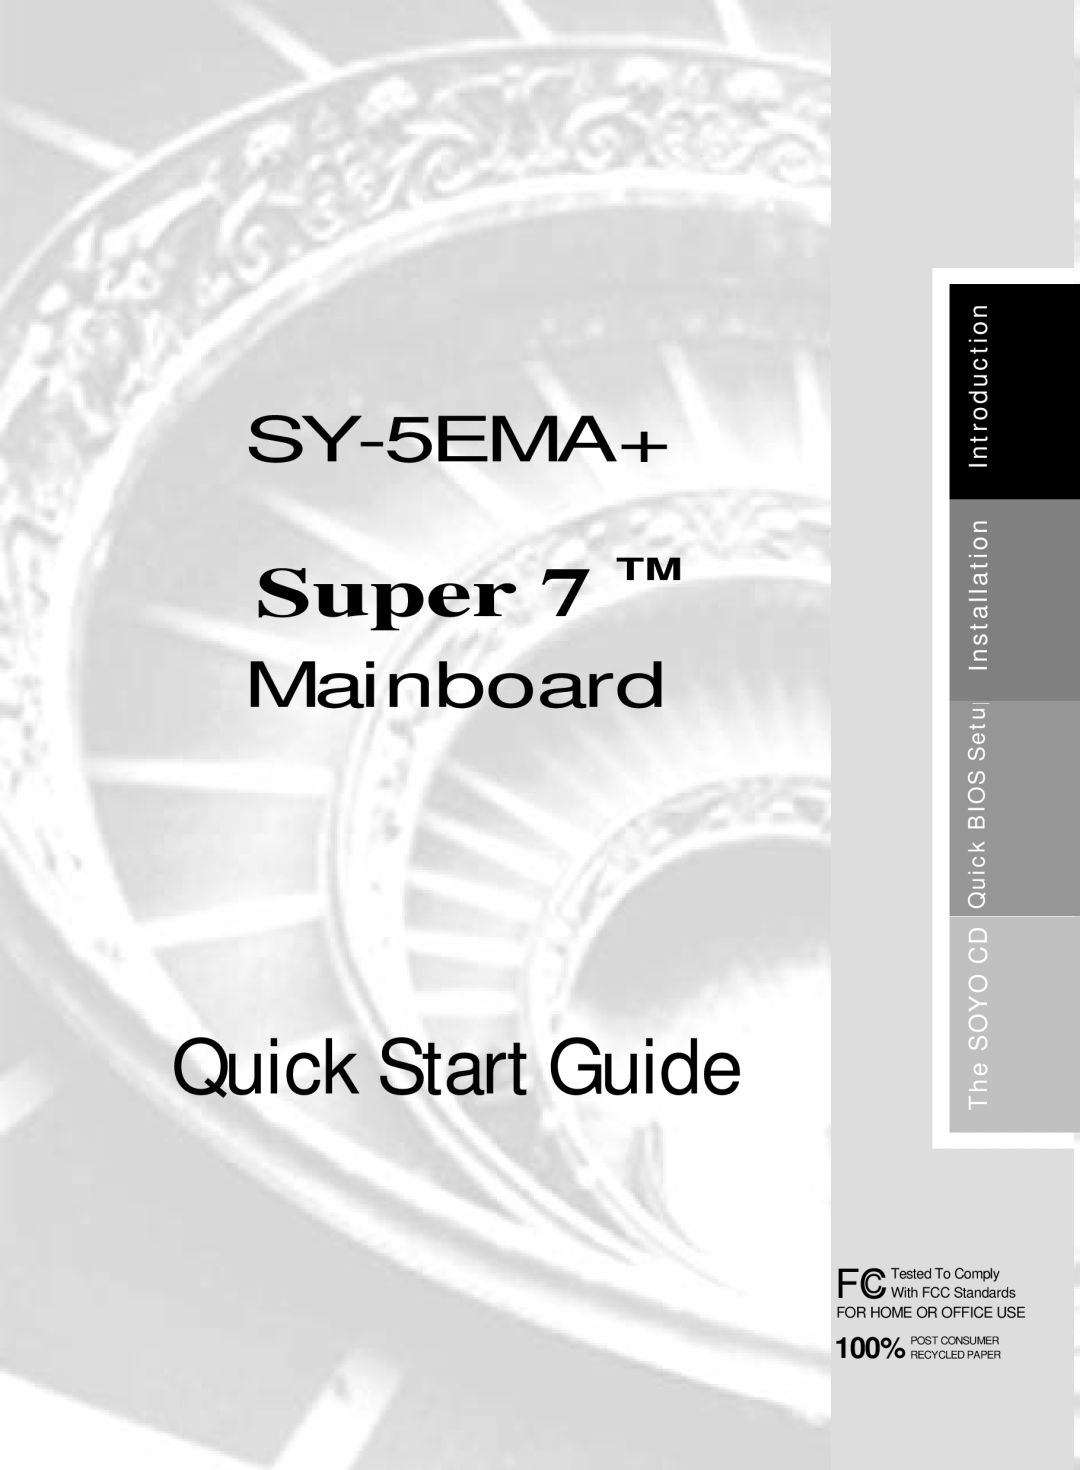 SOYO SY-5EMA+ quick start The SOYO CD Quick BIOS Setu Installation Introduction, Quick Start Guide, Super, Mainboard 